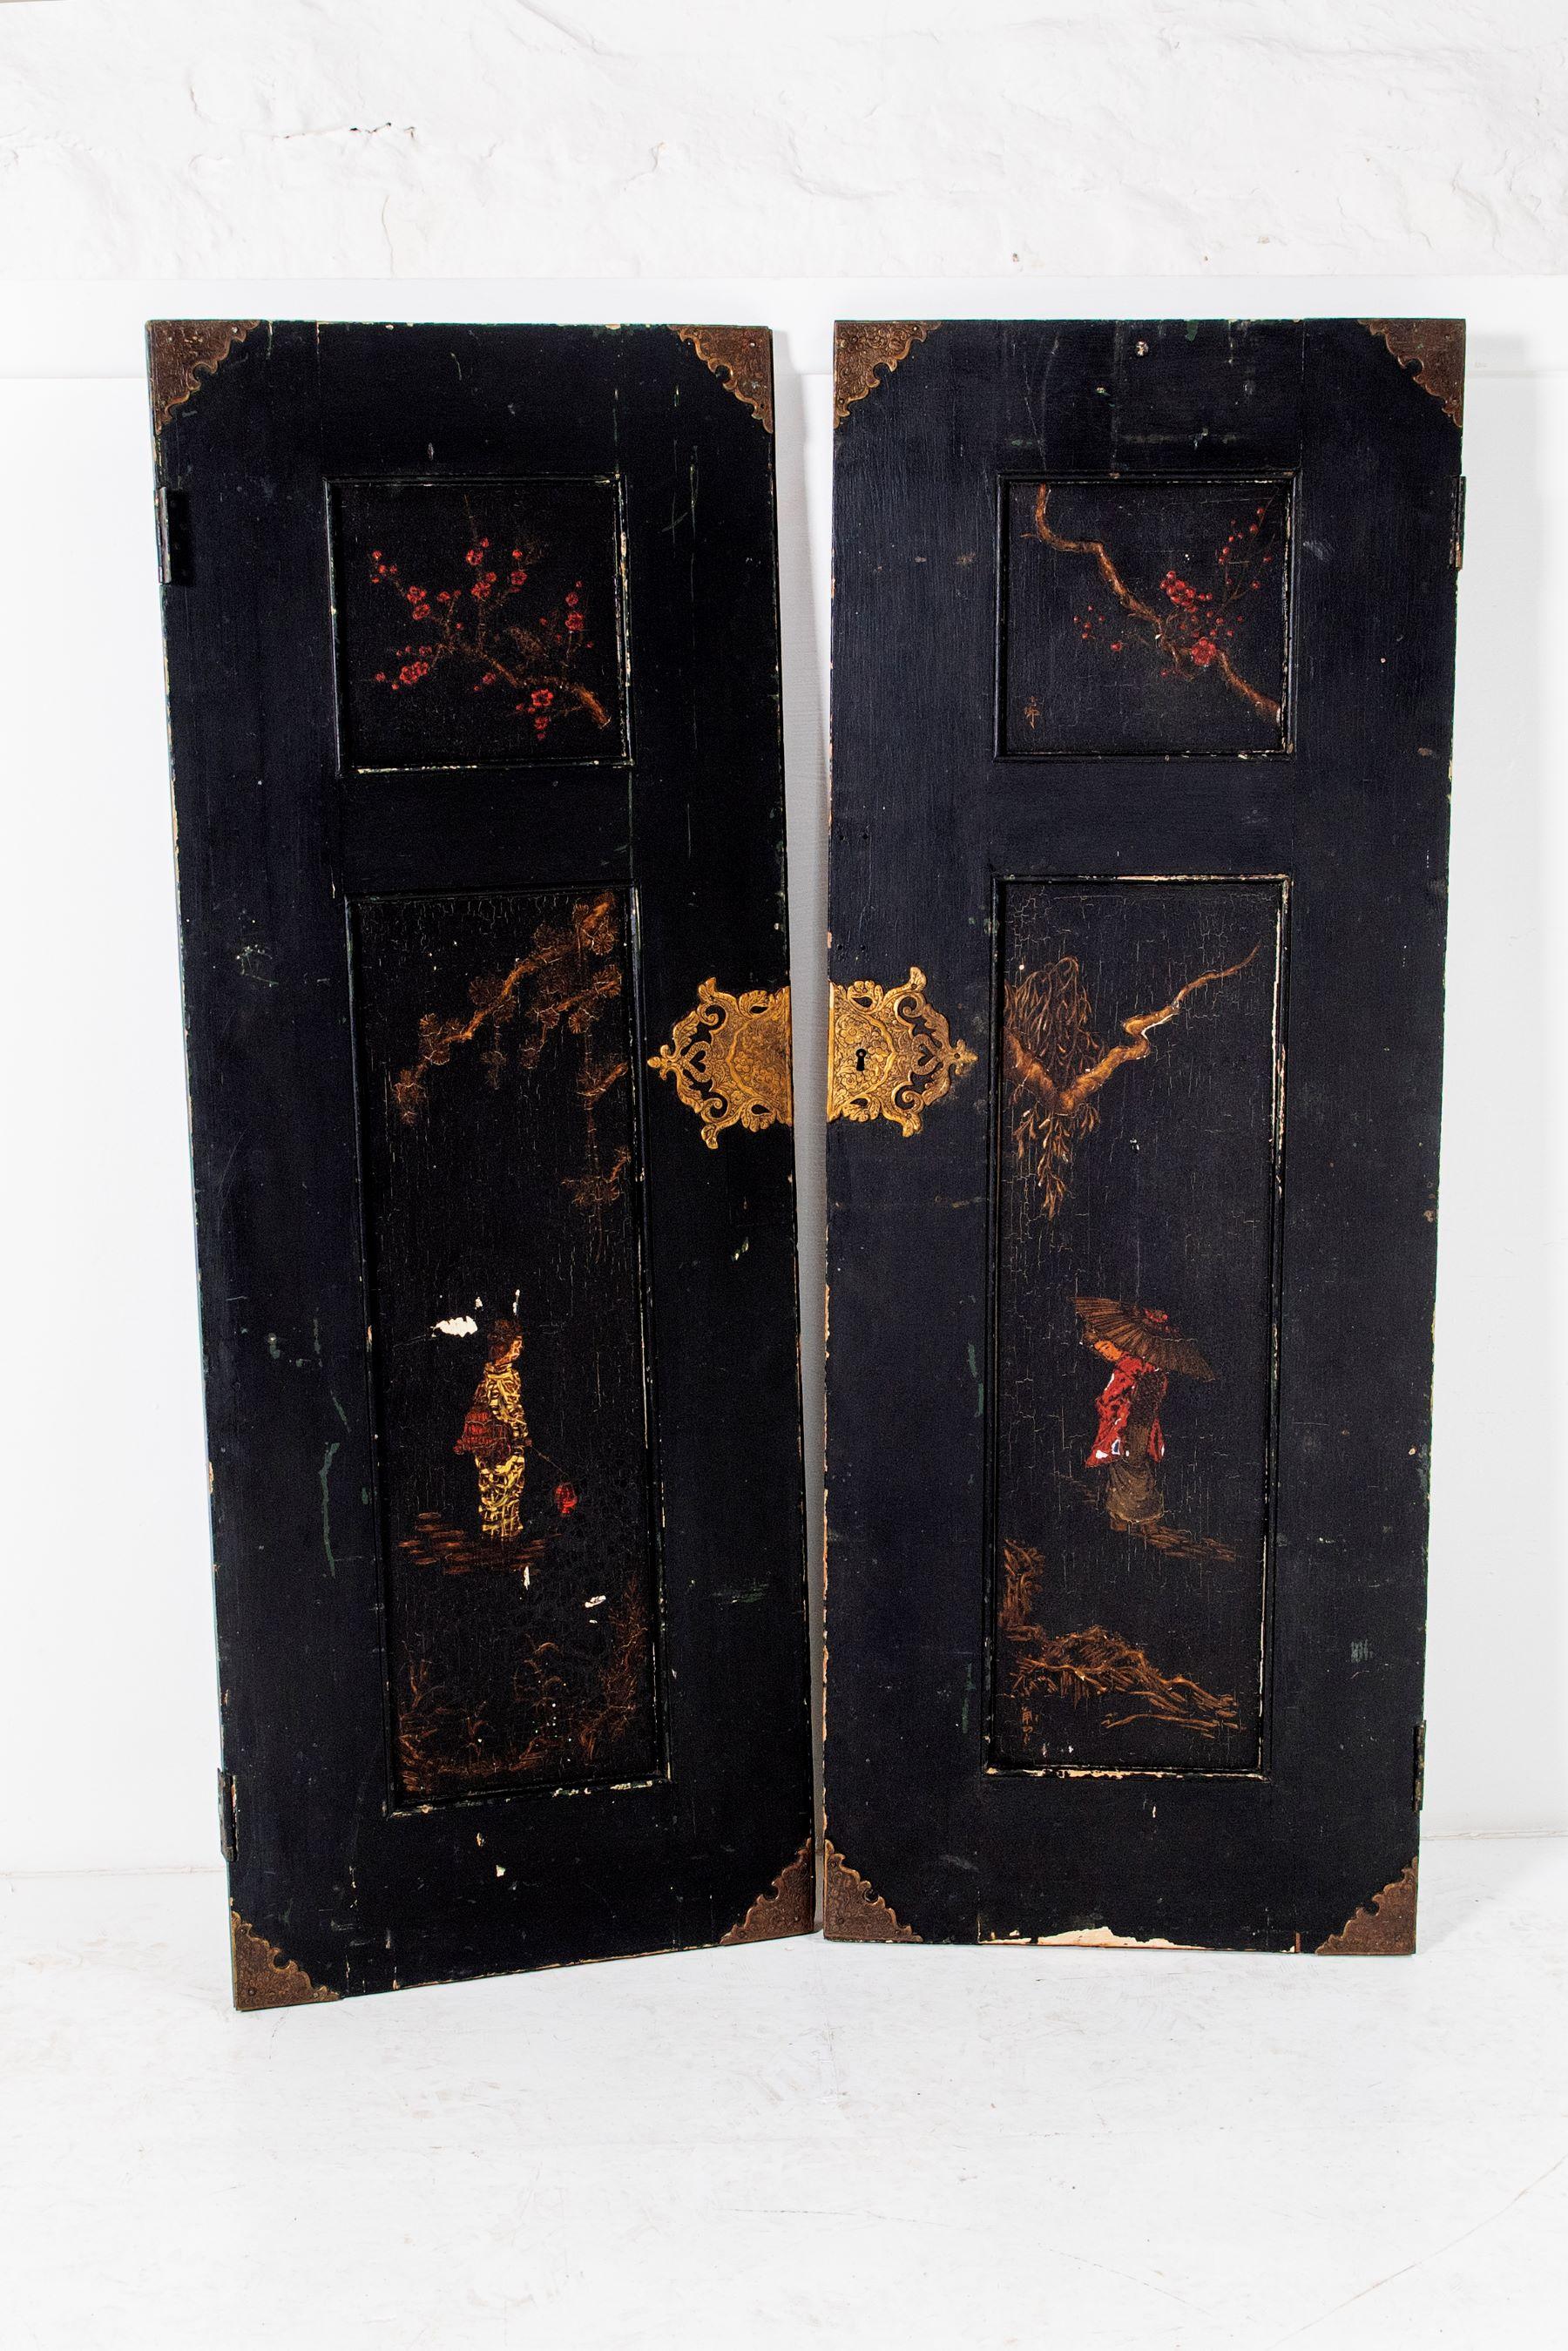 British 19th Century Japanned Panelled Ebonised Black Doors with Chinoiserie Decor